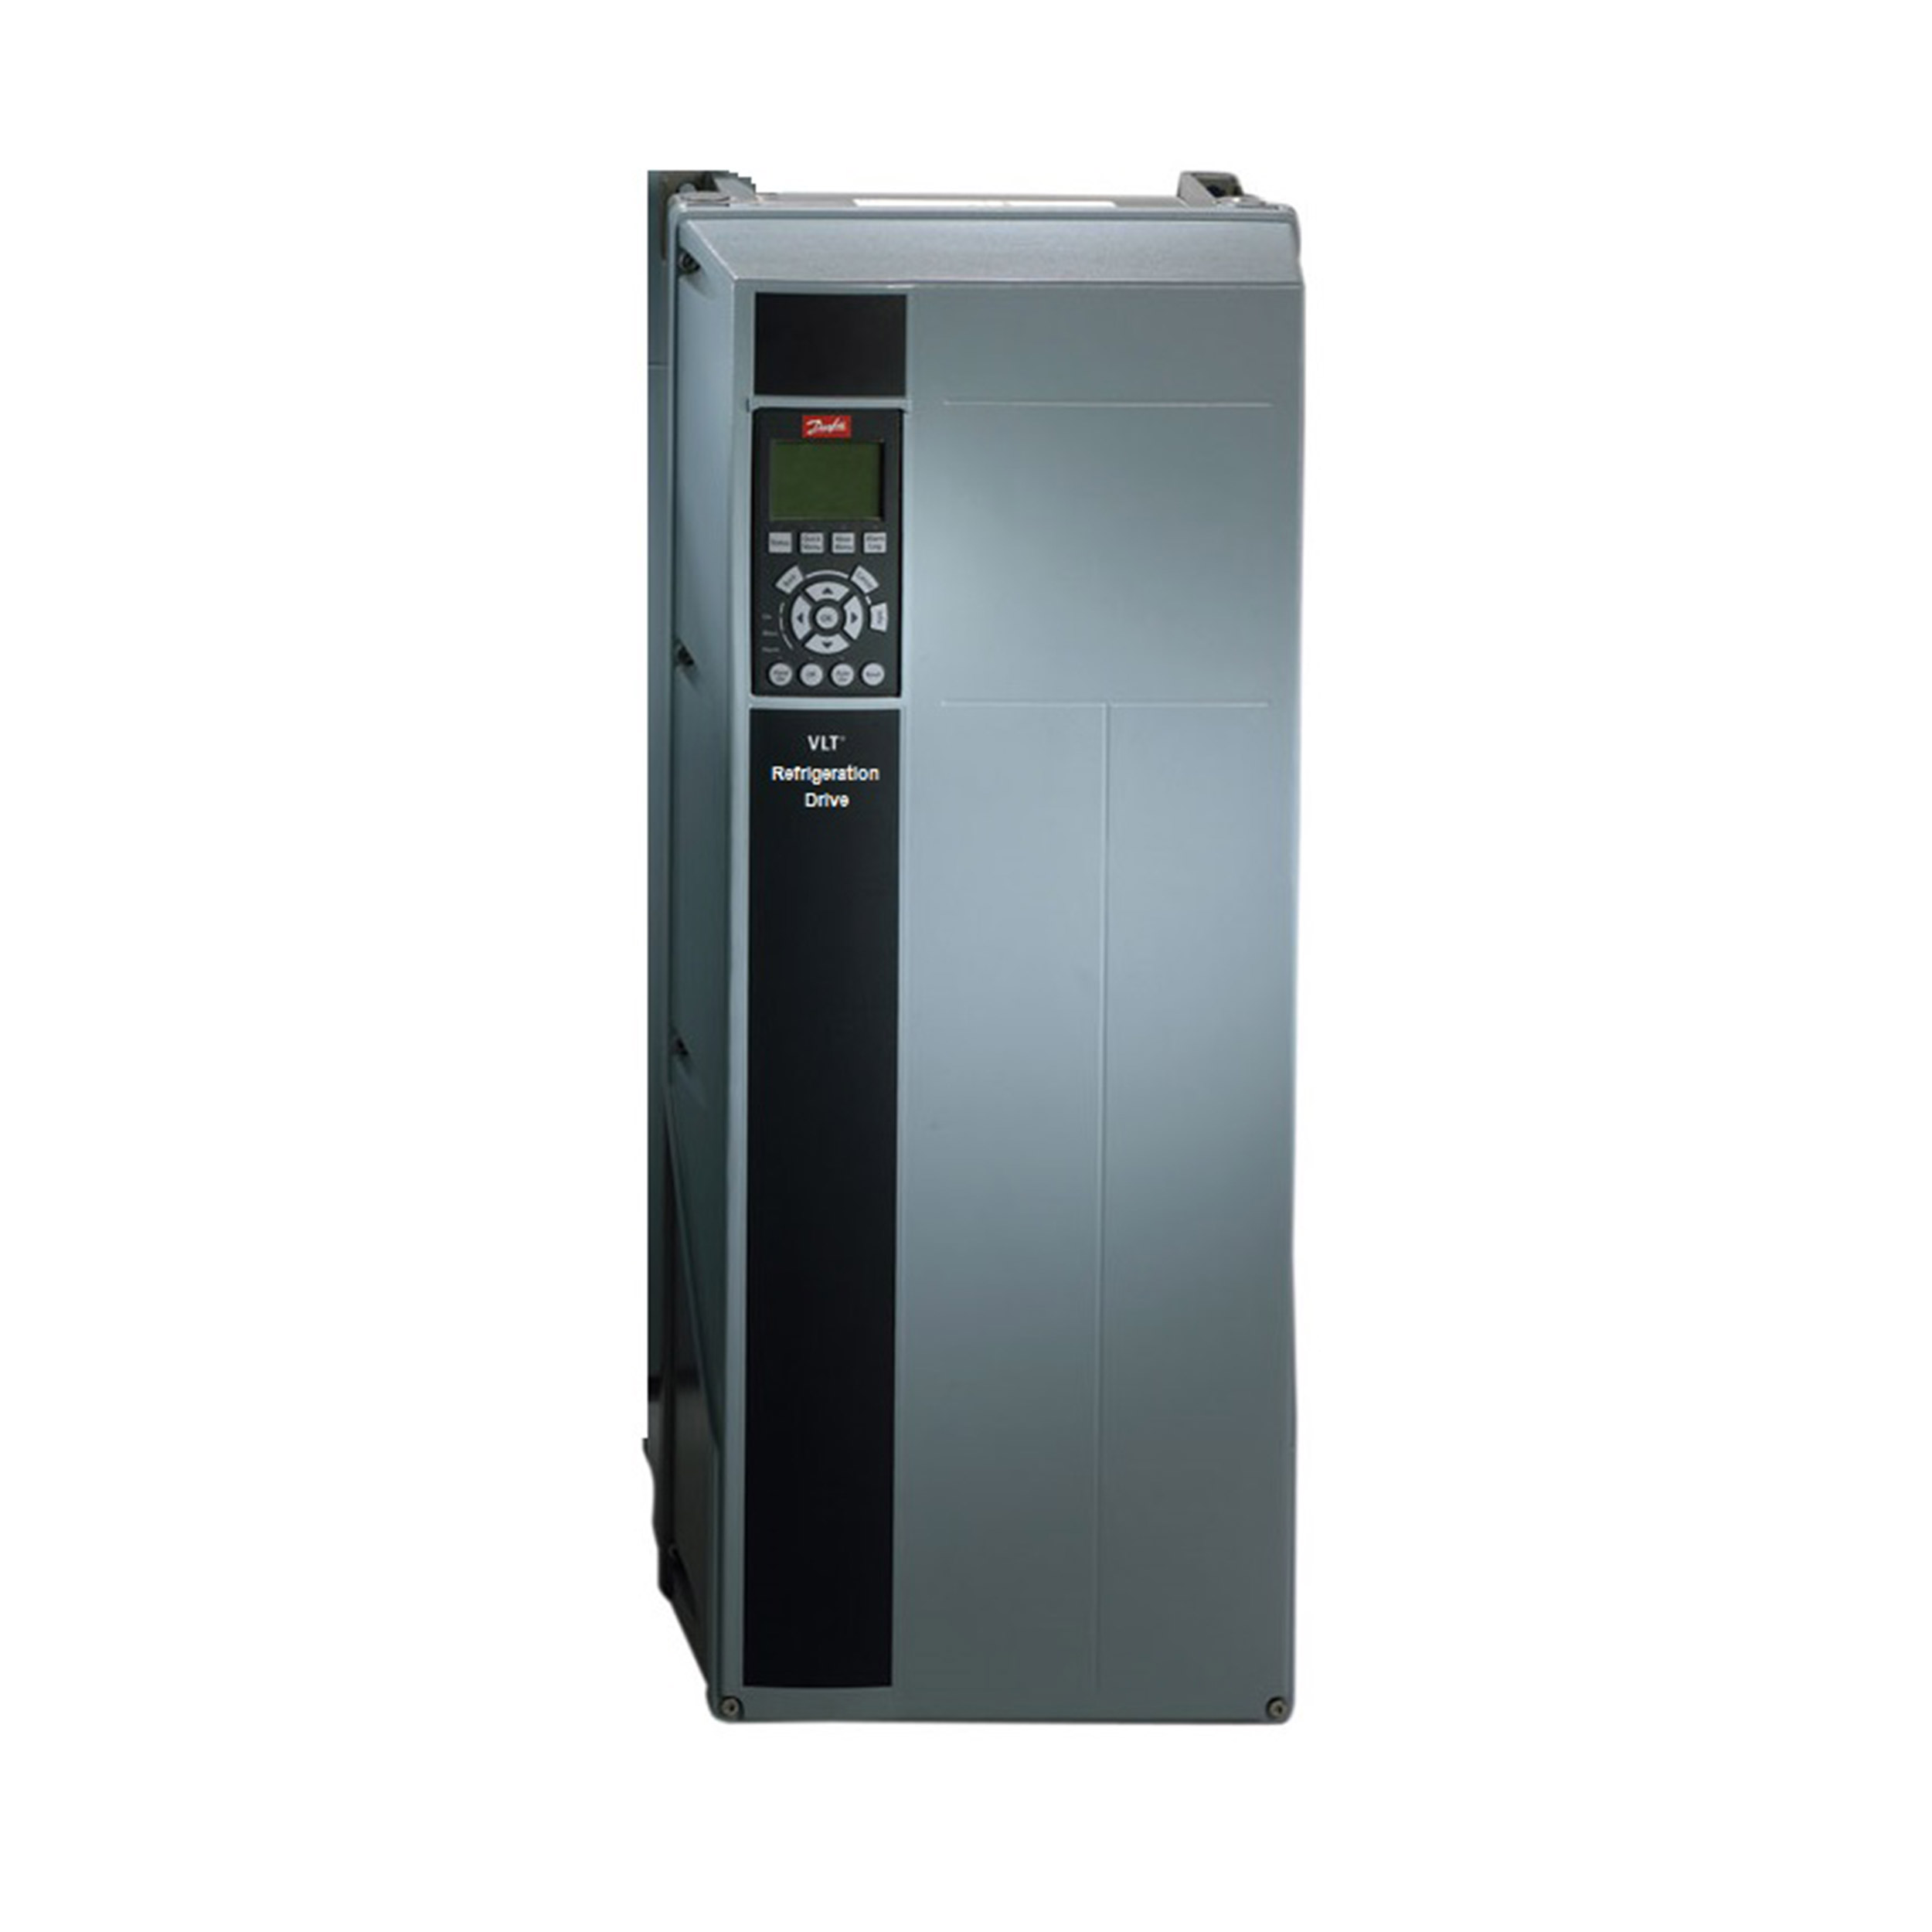 134F8779 VLT Refrigeration Drive FC 103